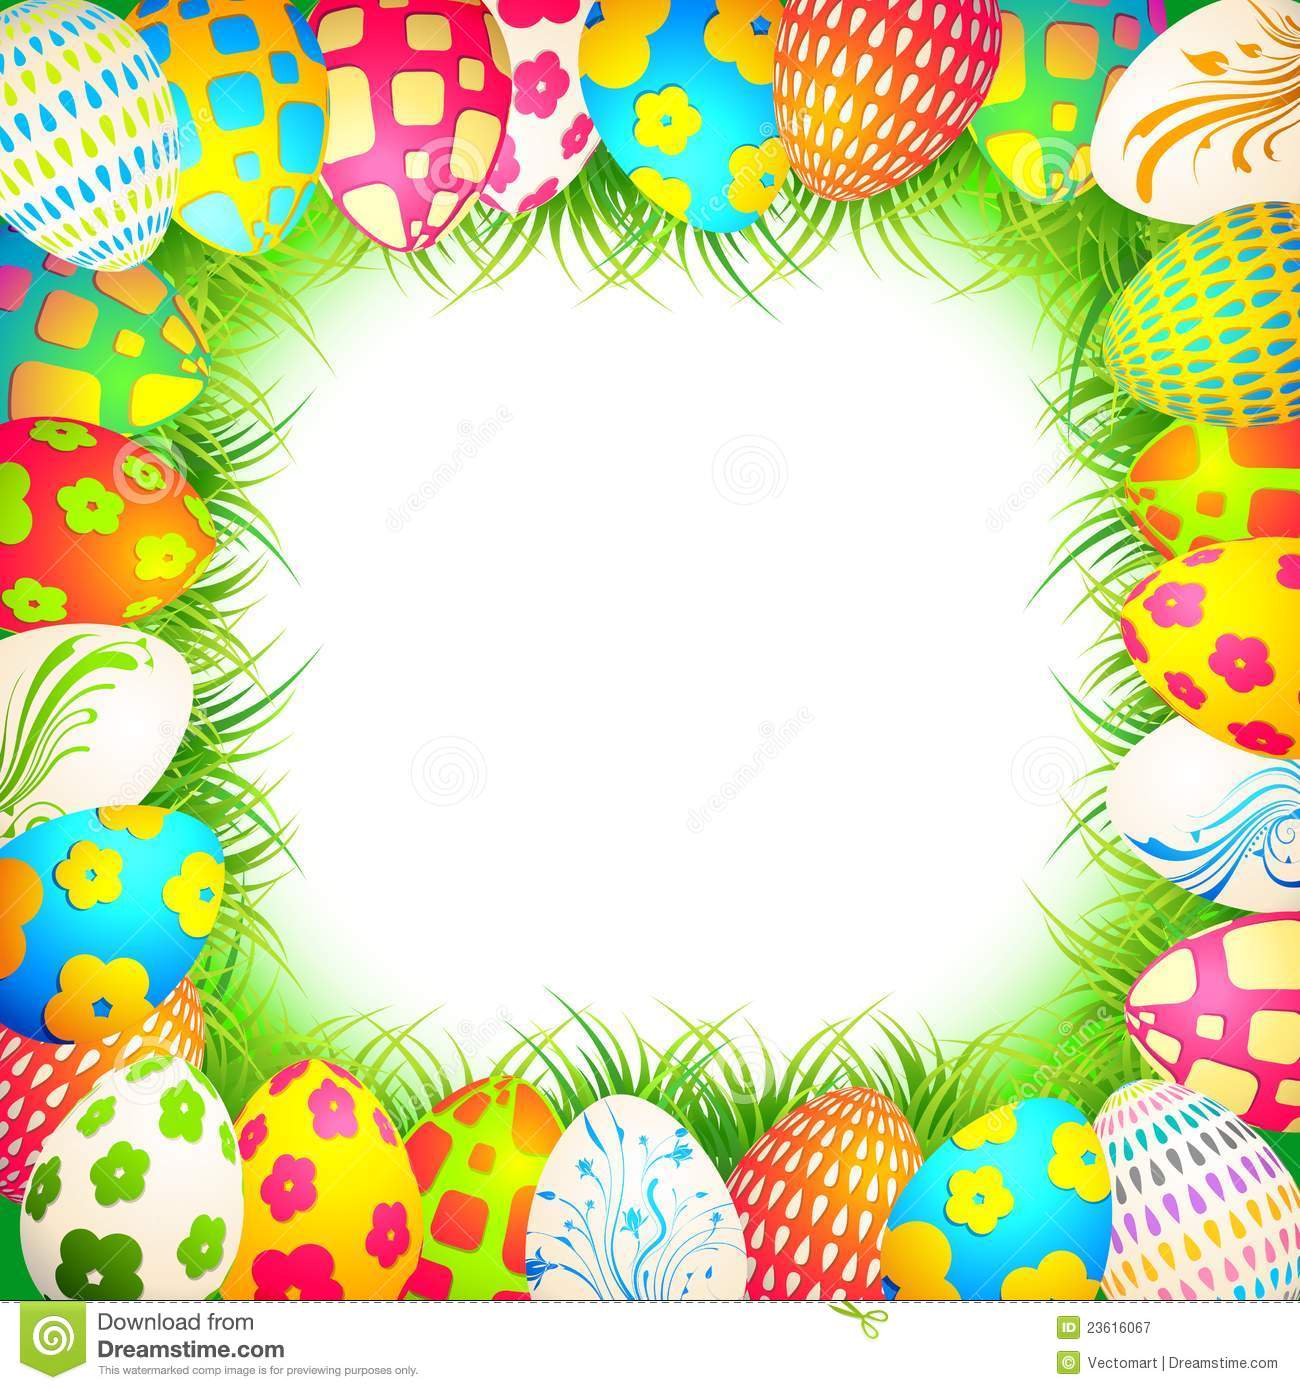 Easter Background images